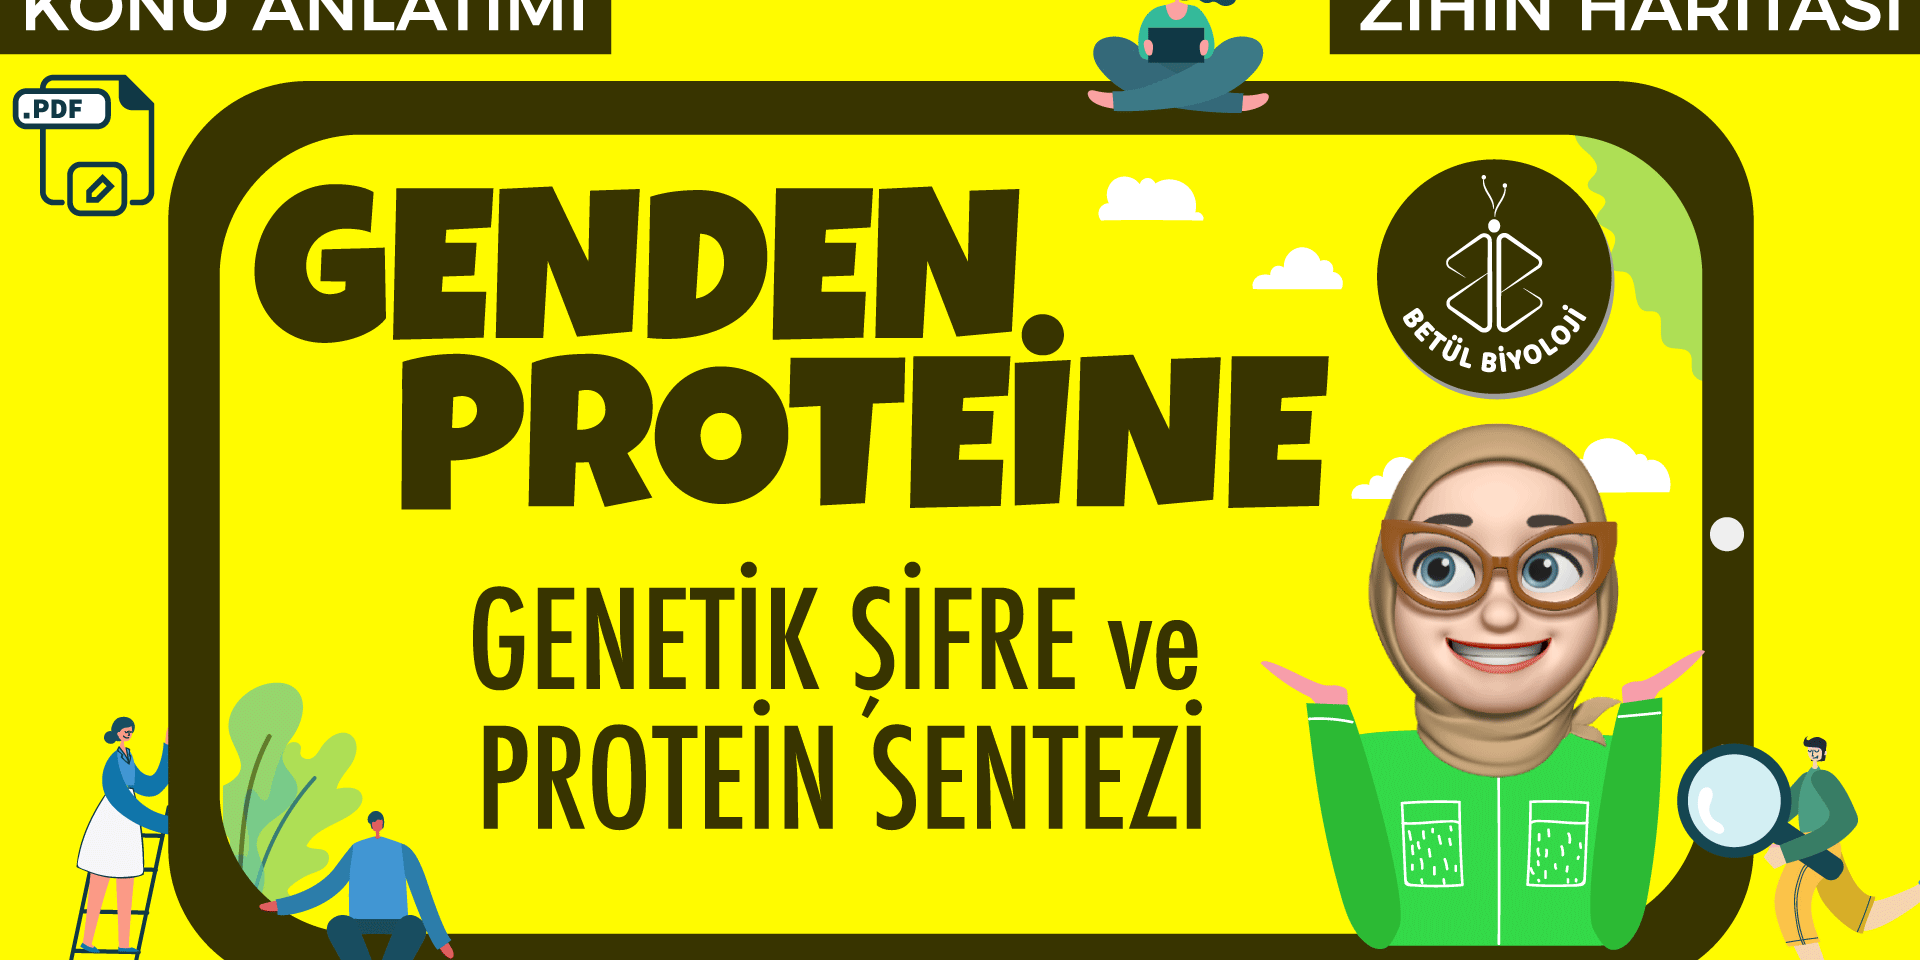 genden_proteine_genetik_şifre_ve_protein_sentezi